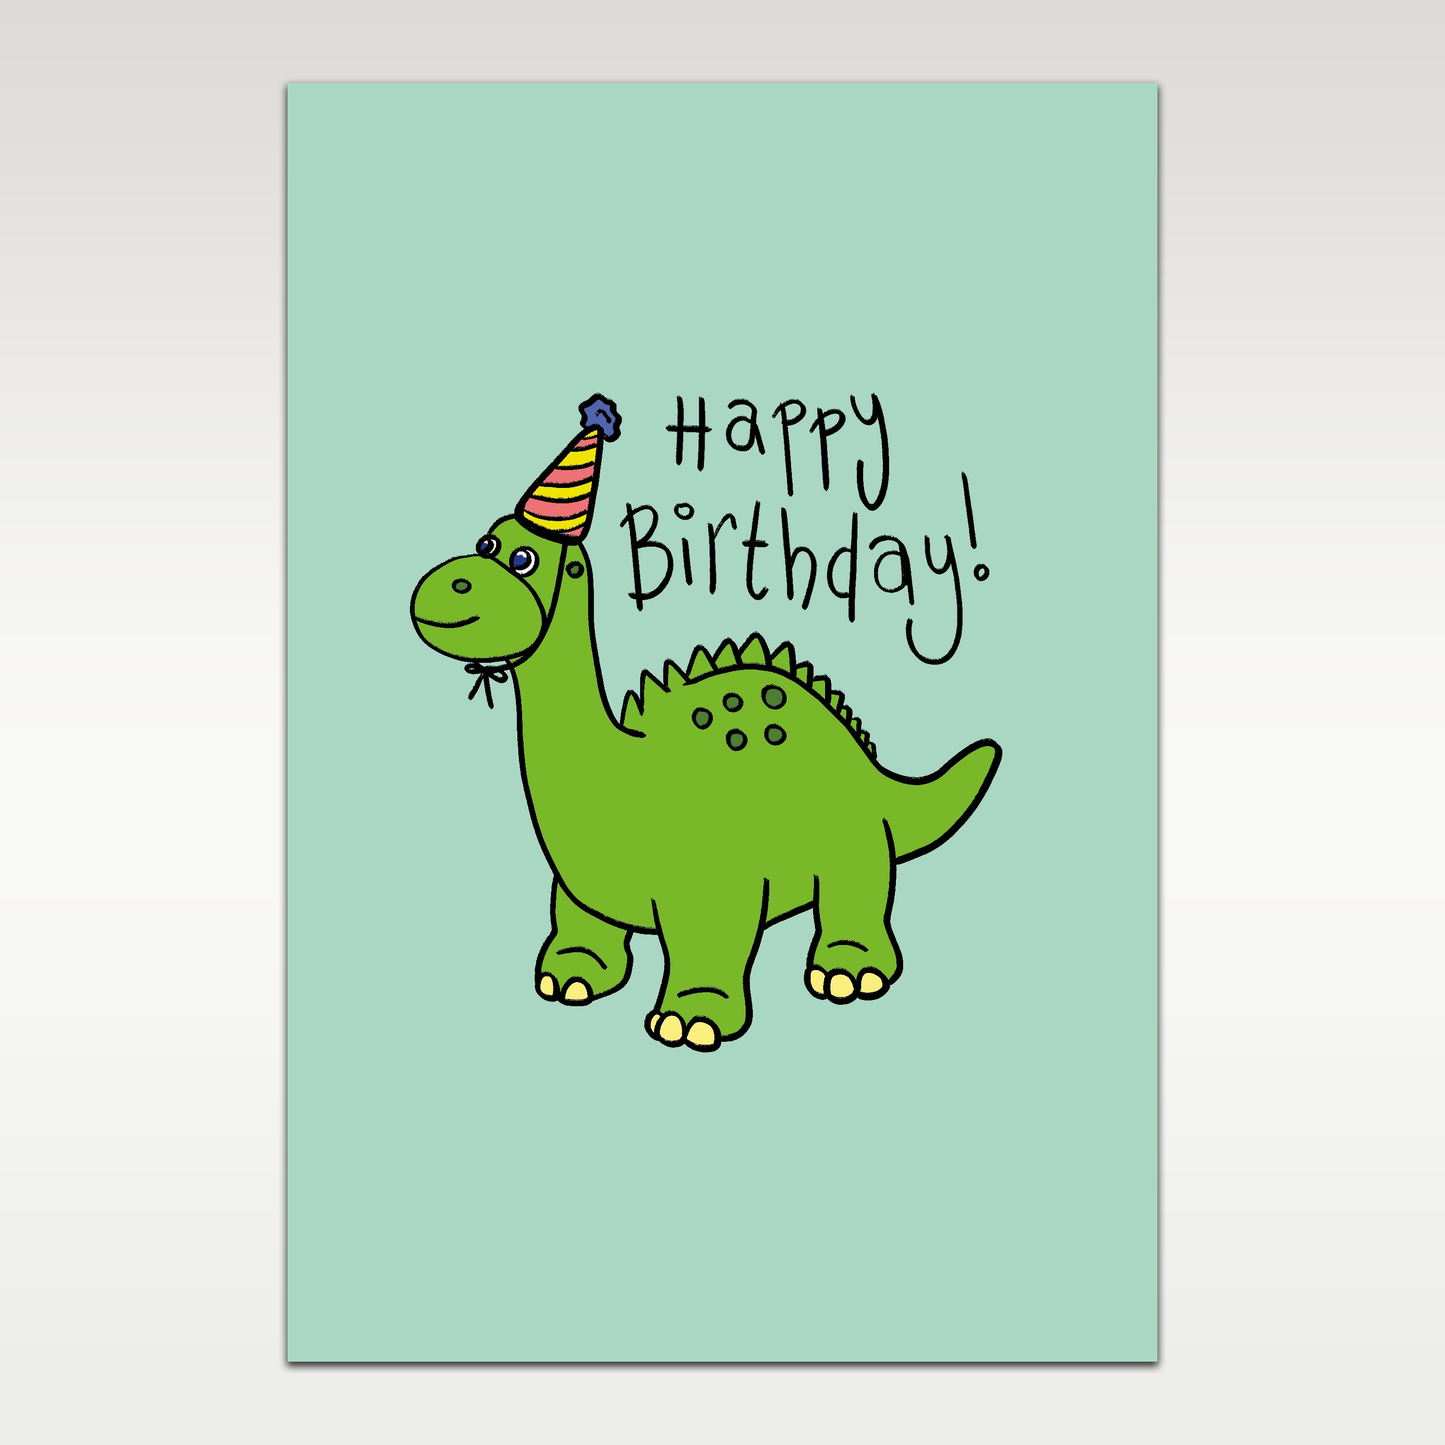 Happy Birthday Dinosaur Greetings card